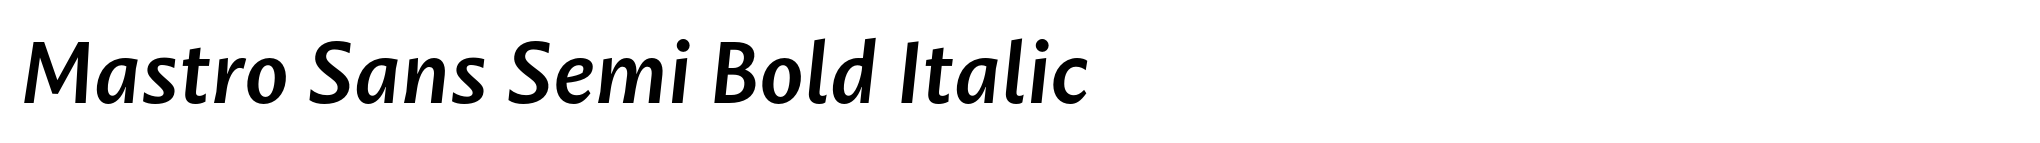 Mastro Sans Semi Bold Italic image